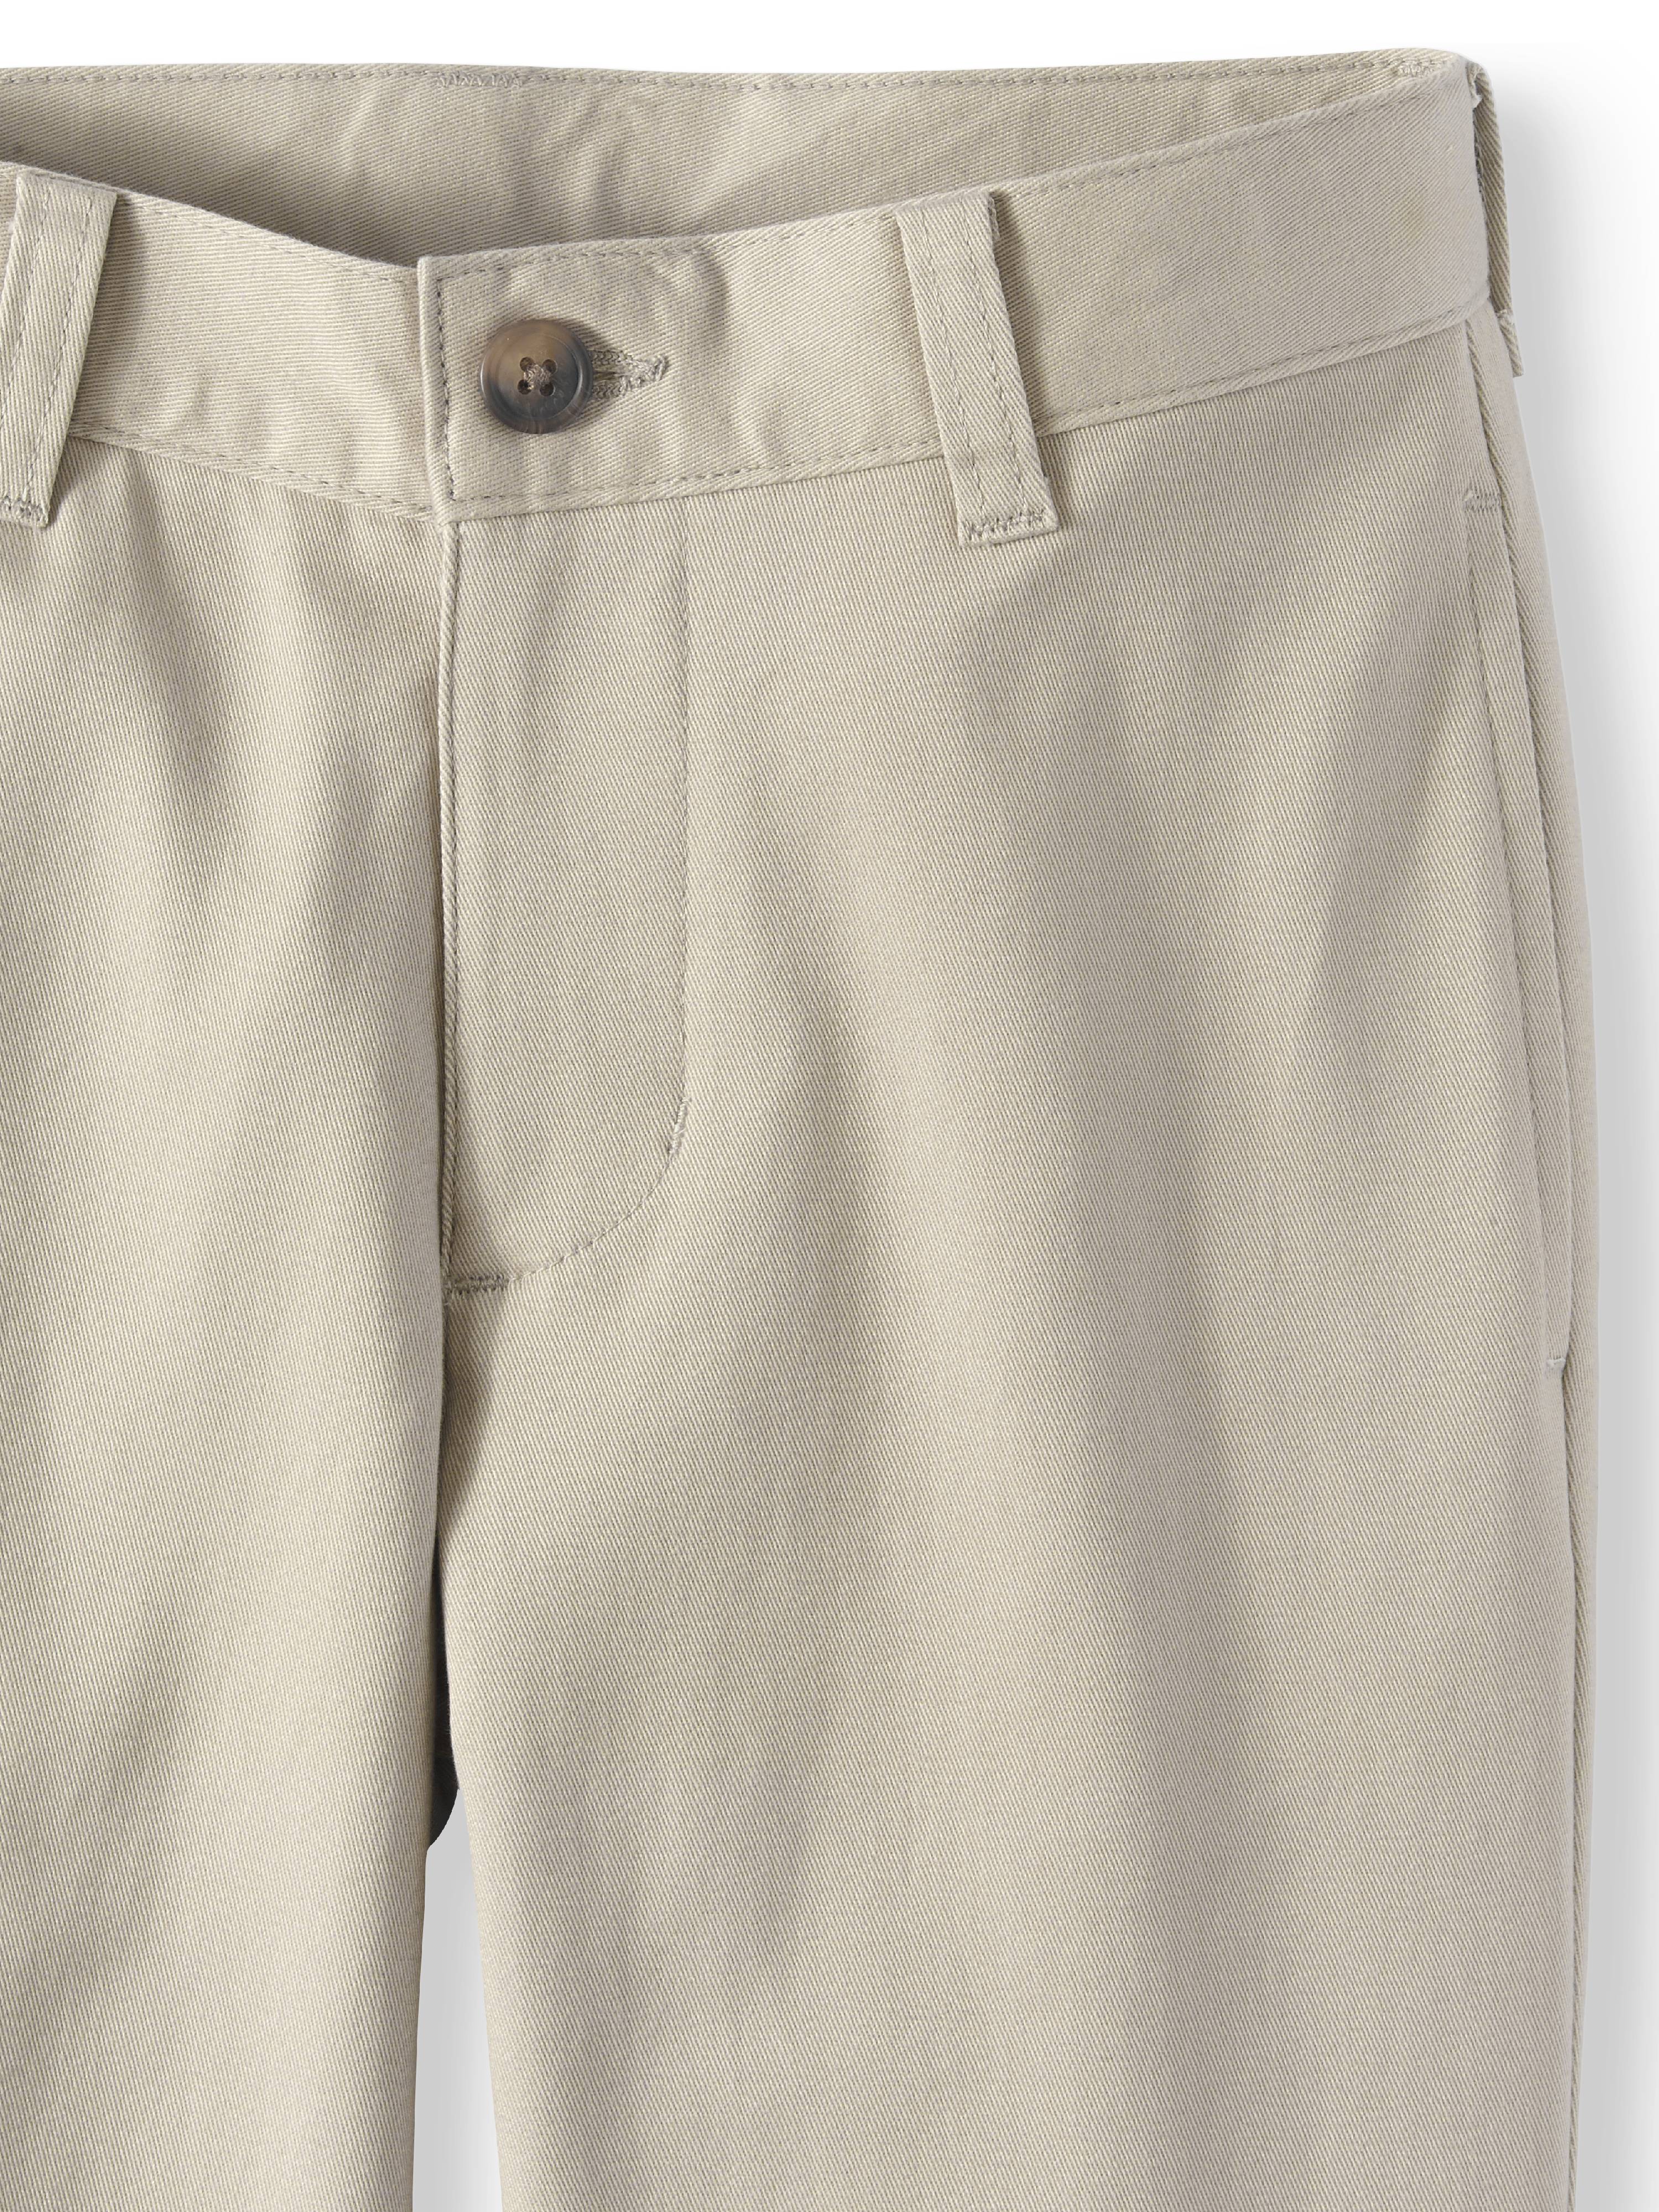 Wonder Nation Boys School Uniform Super Soft Stretch Twill Flat Front Pants, Sizes 4-22, Slim, & Husky - image 2 of 4